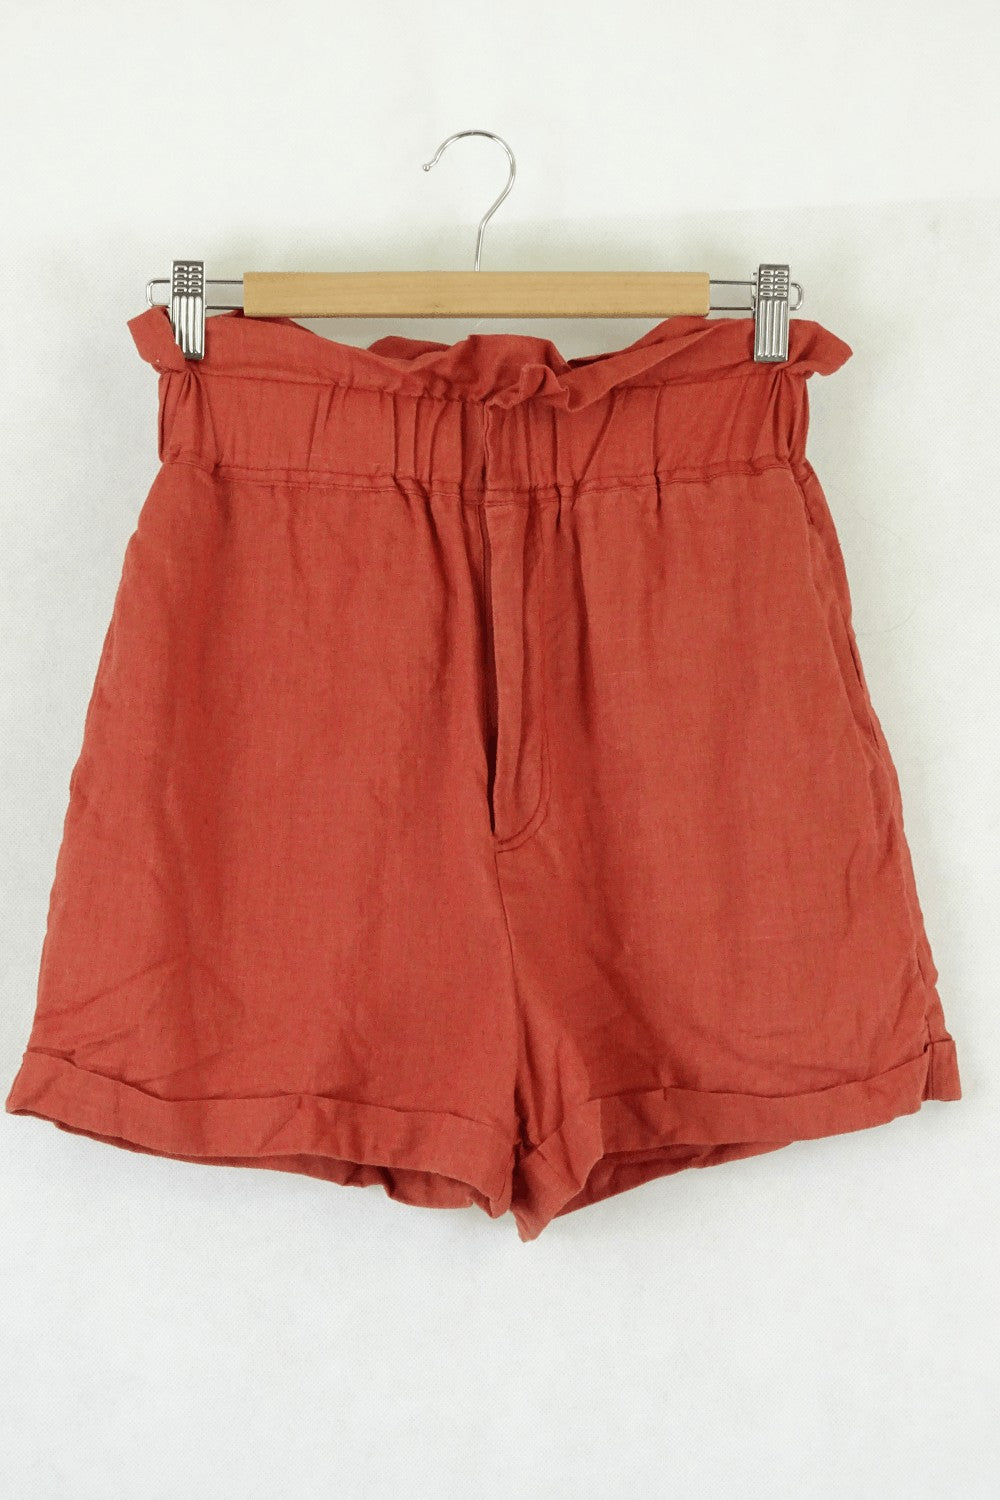 I.D.S. Orange Shorts Xs